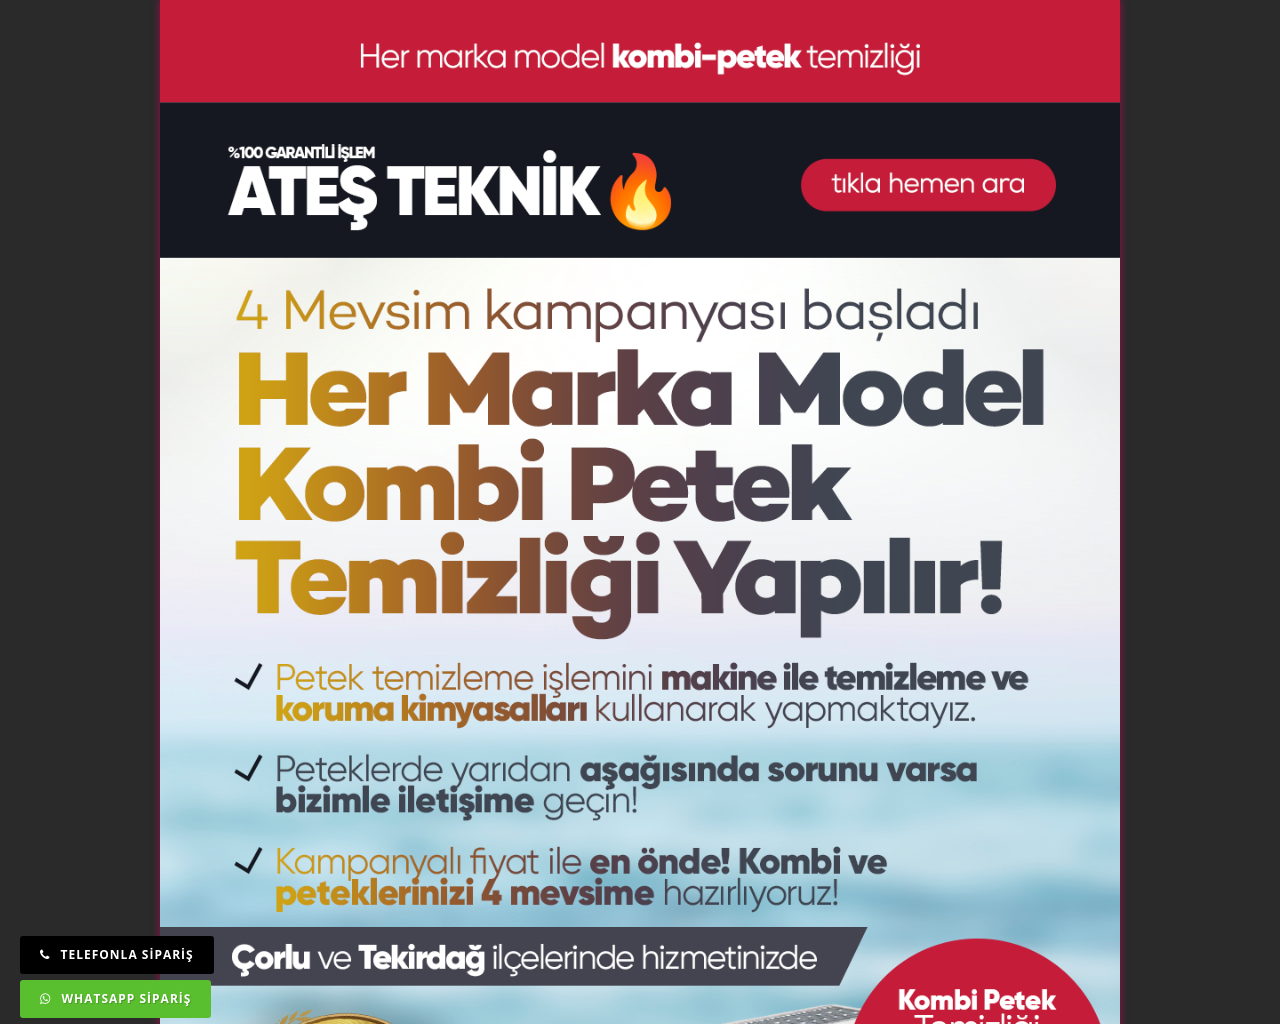 atesteknik.com